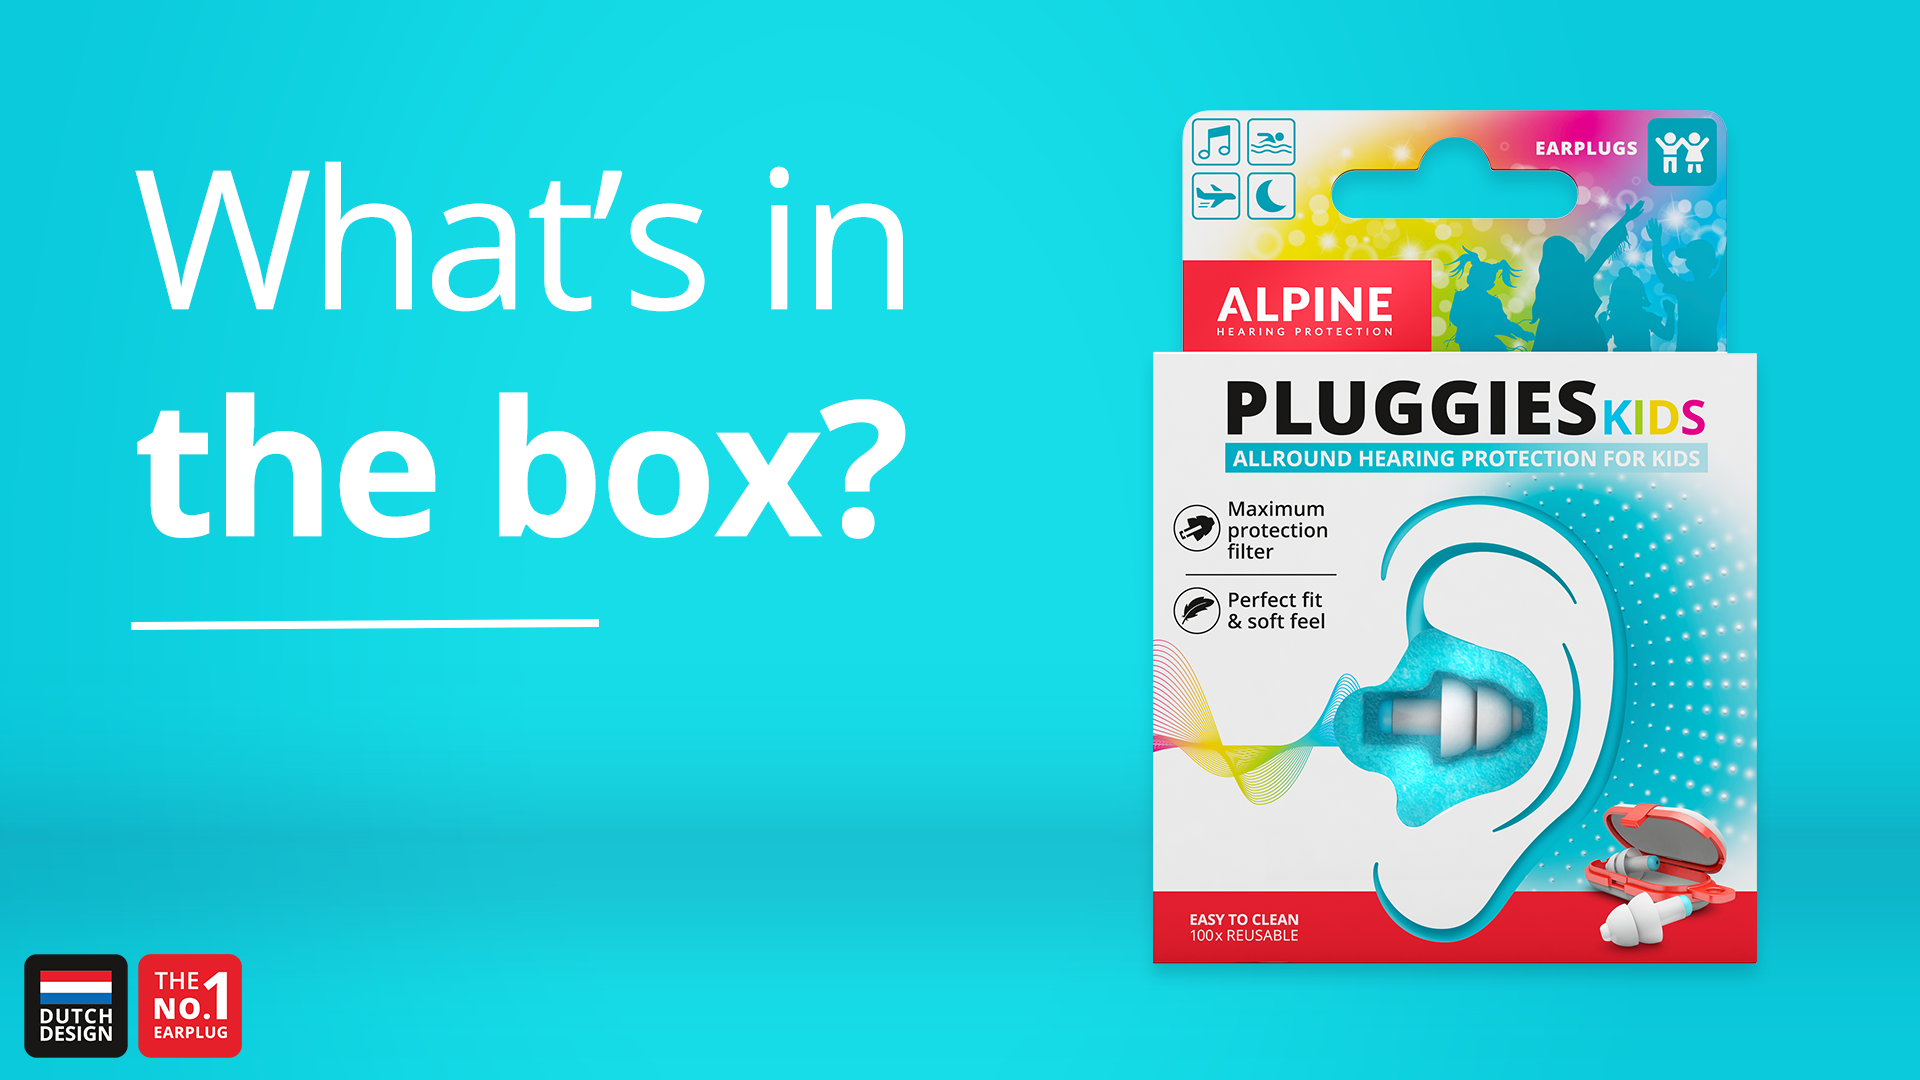 Alpine Pluggies earplug for kids – Alpine Hearing Protection